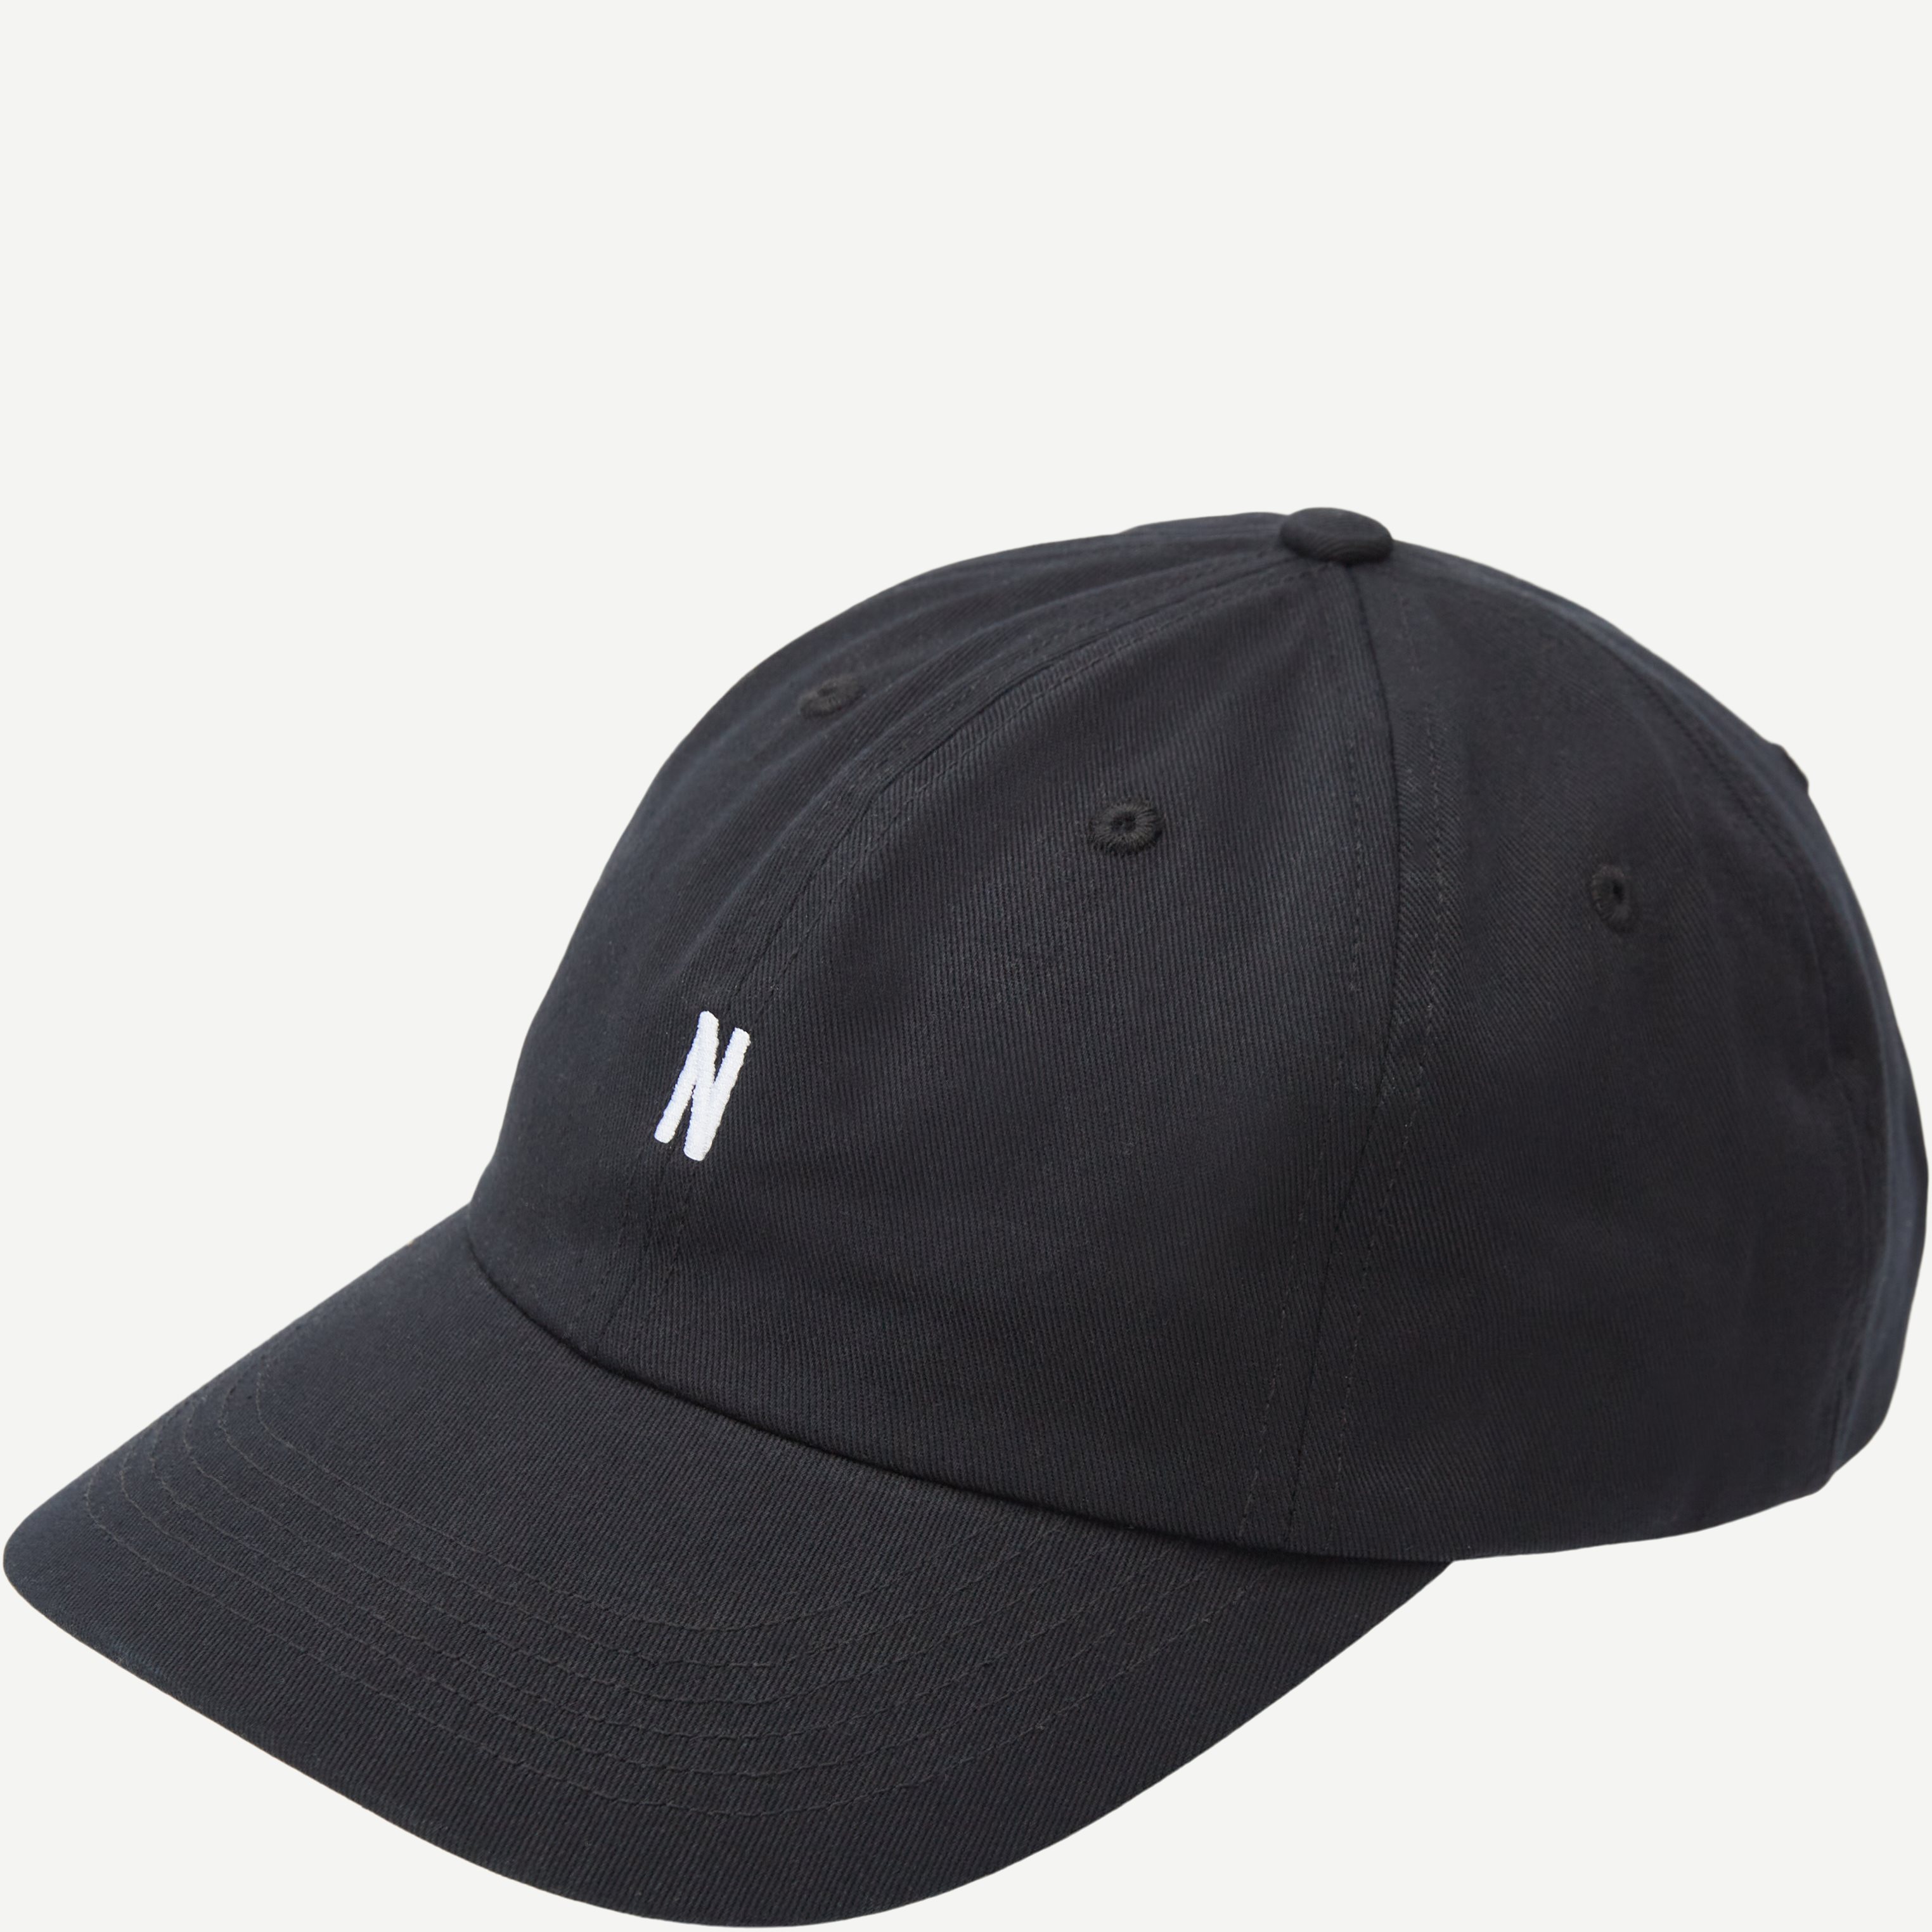 Caps - Regular fit - Black